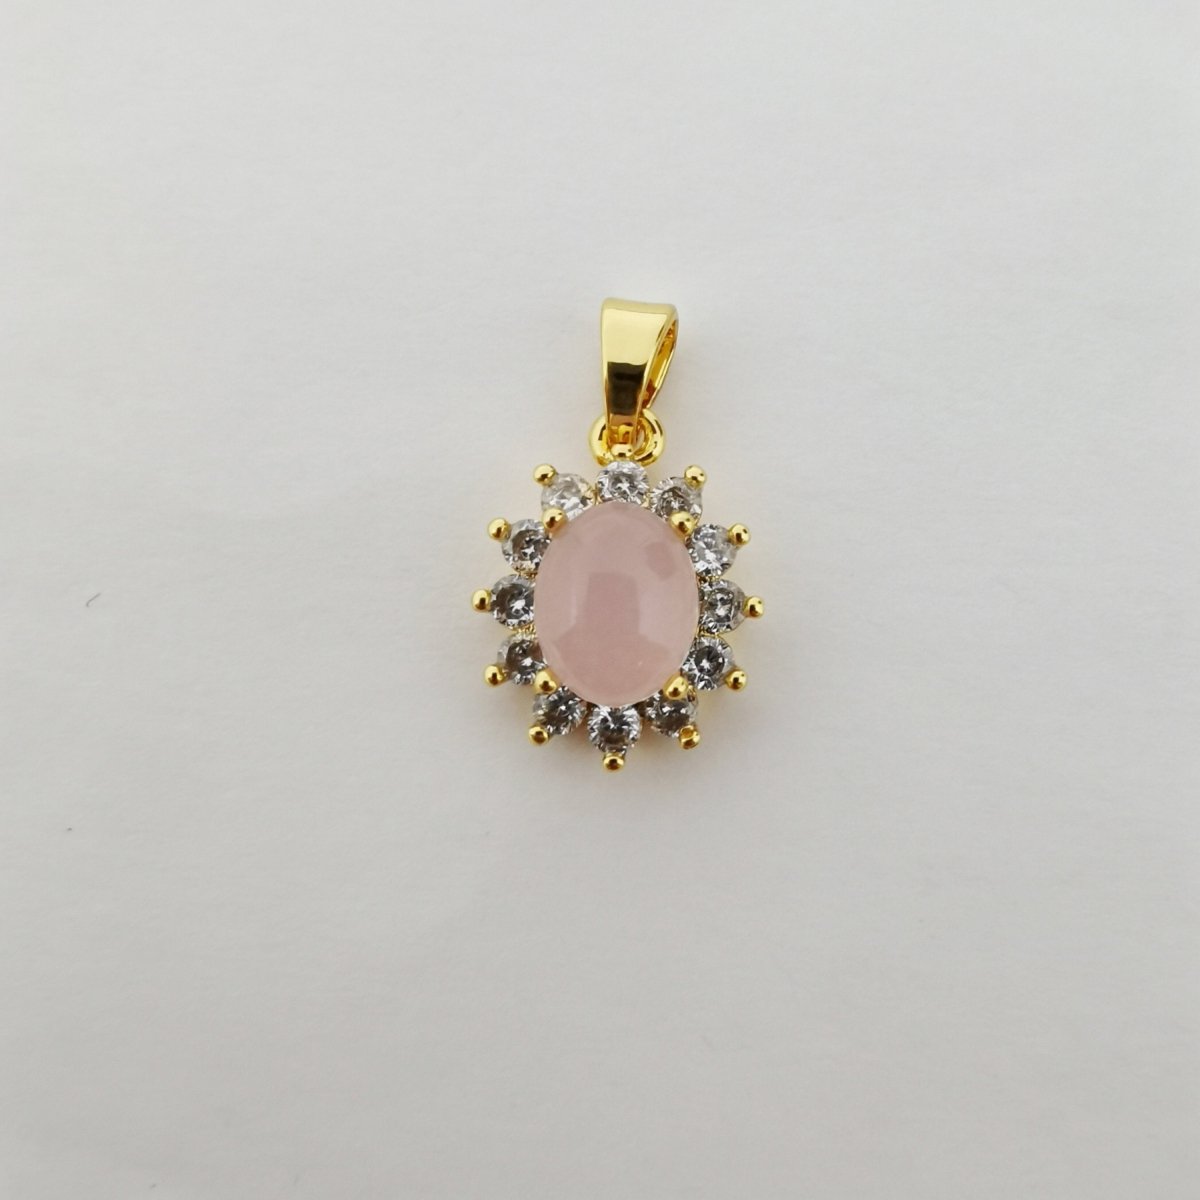 24k Gold Filled Rosegold Stone Sun charm, Cubic Zirconia Jewels, Micro Diamond Paved, Pink Stone Charm, Sun Flower Charm D-071 - DLUXCA